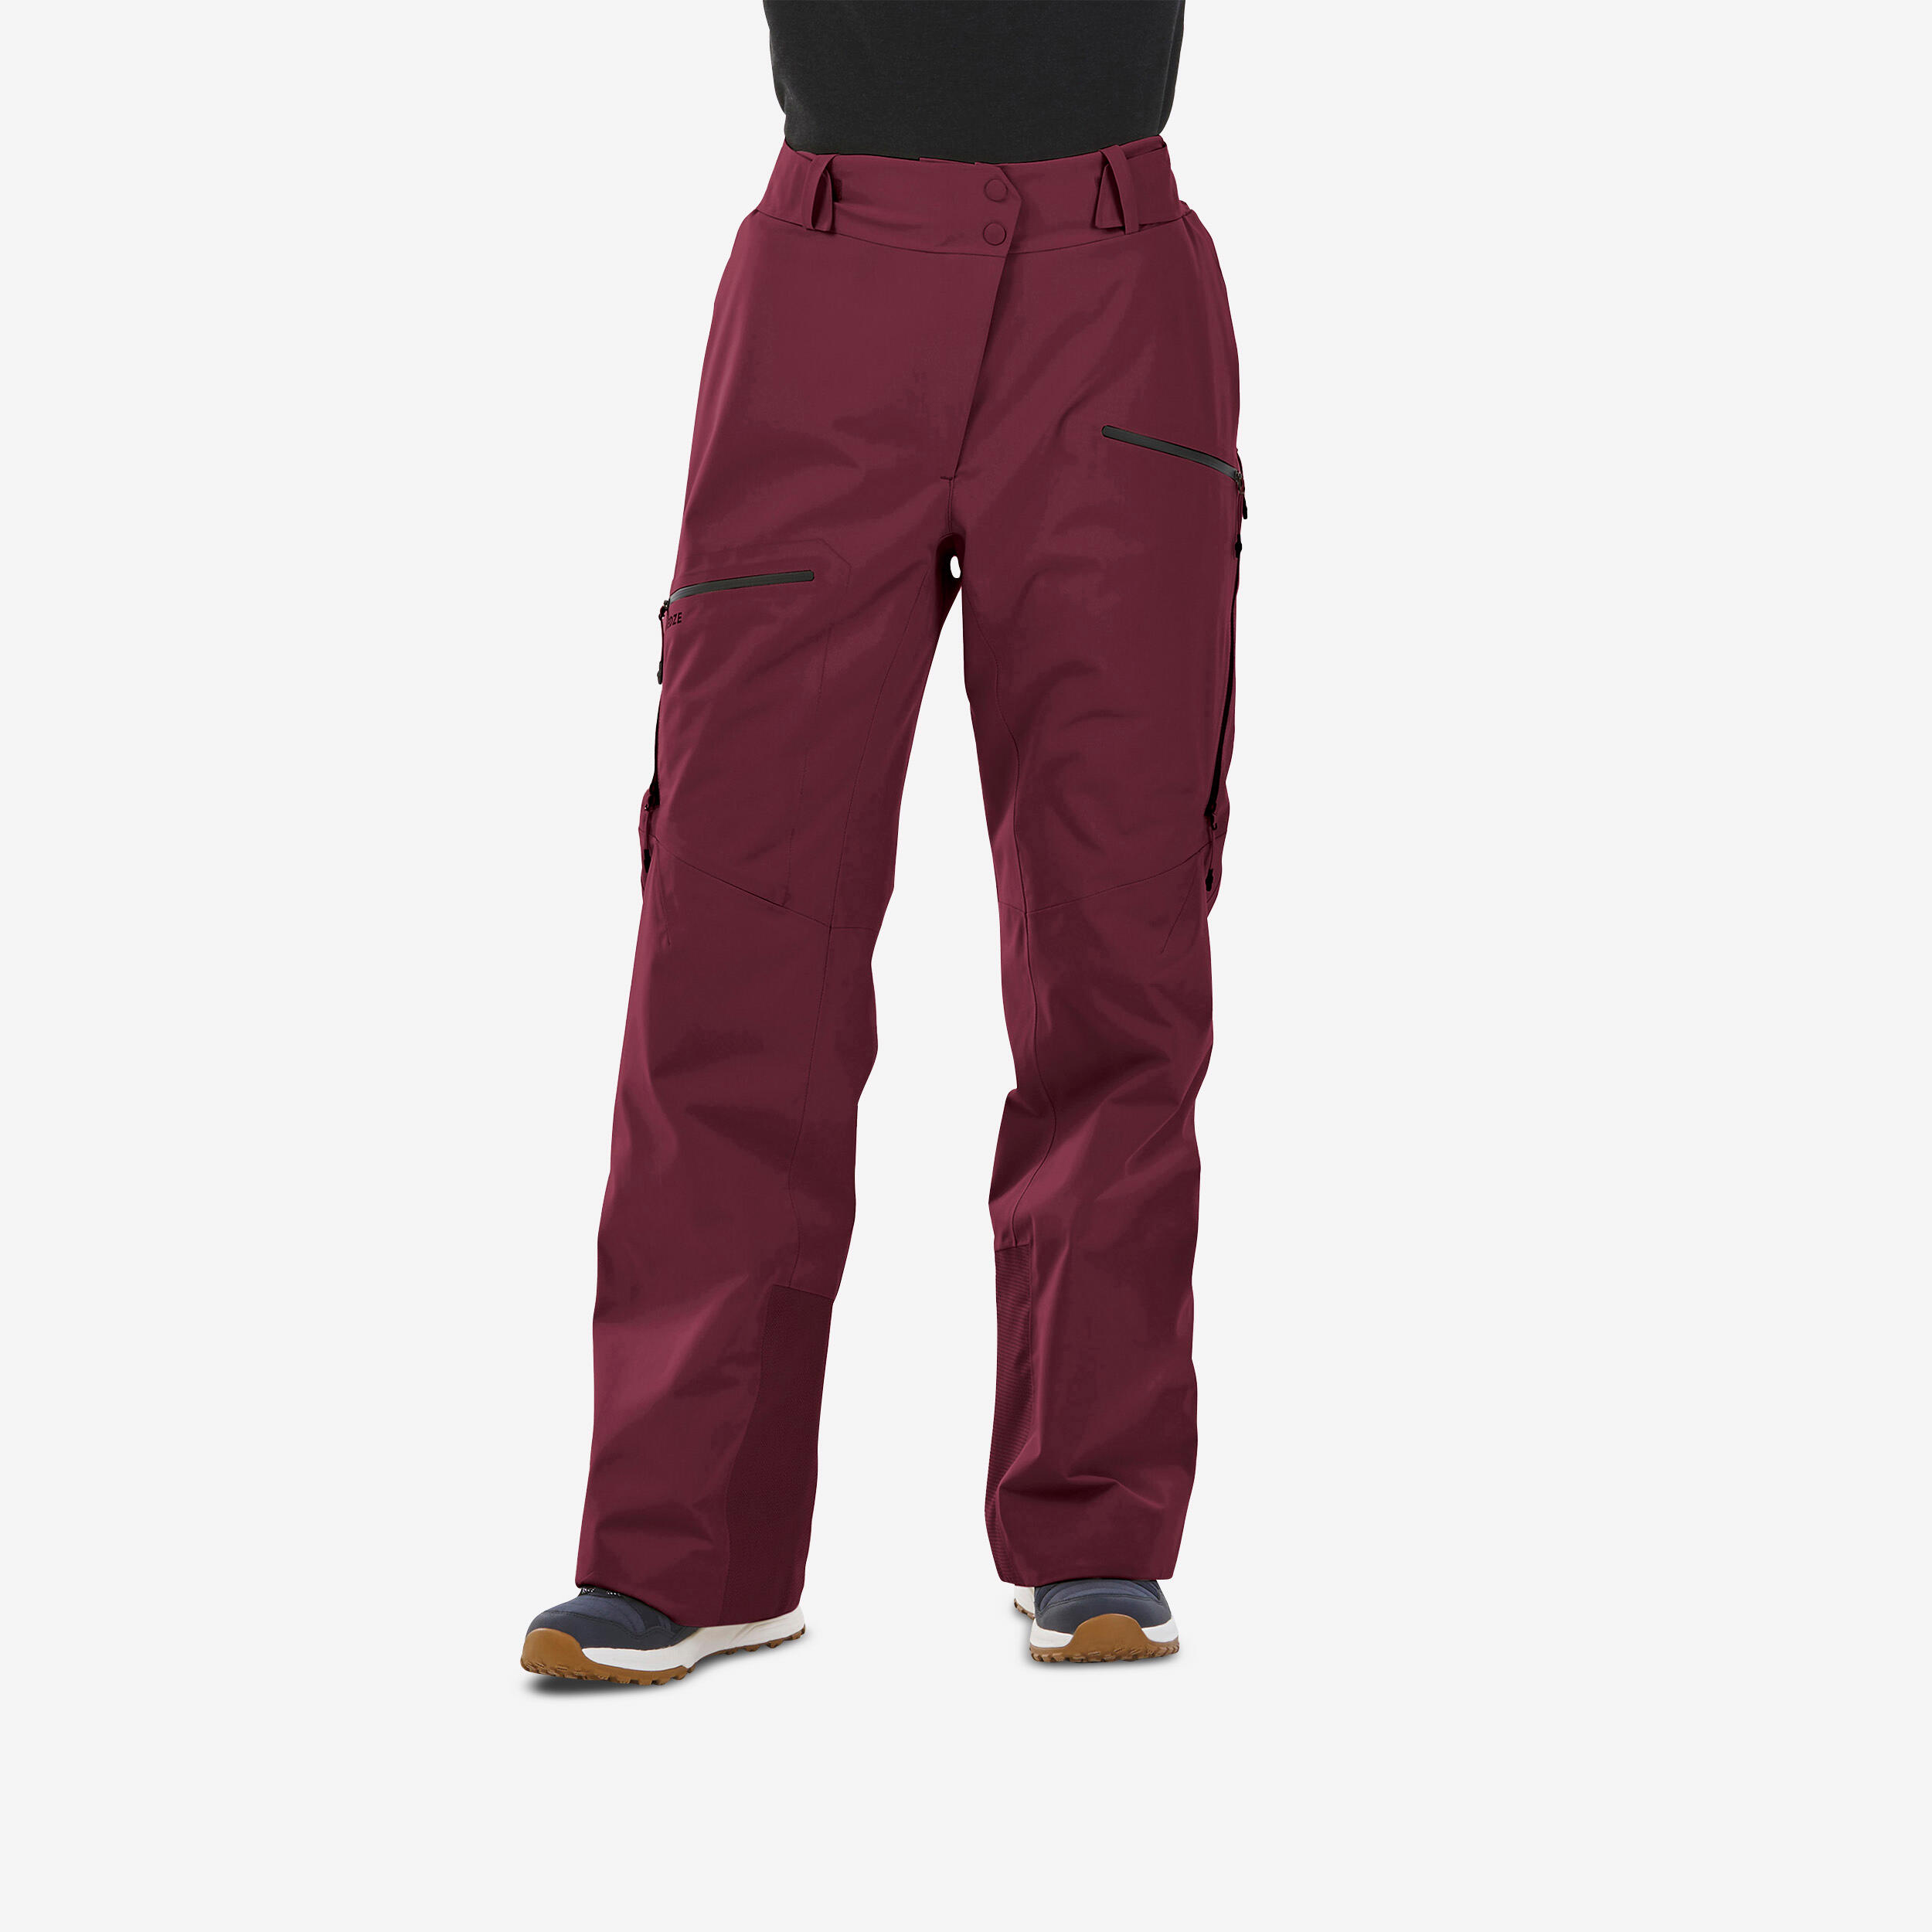 WEDZE Women's ski trousers - FR100 - Burgundy